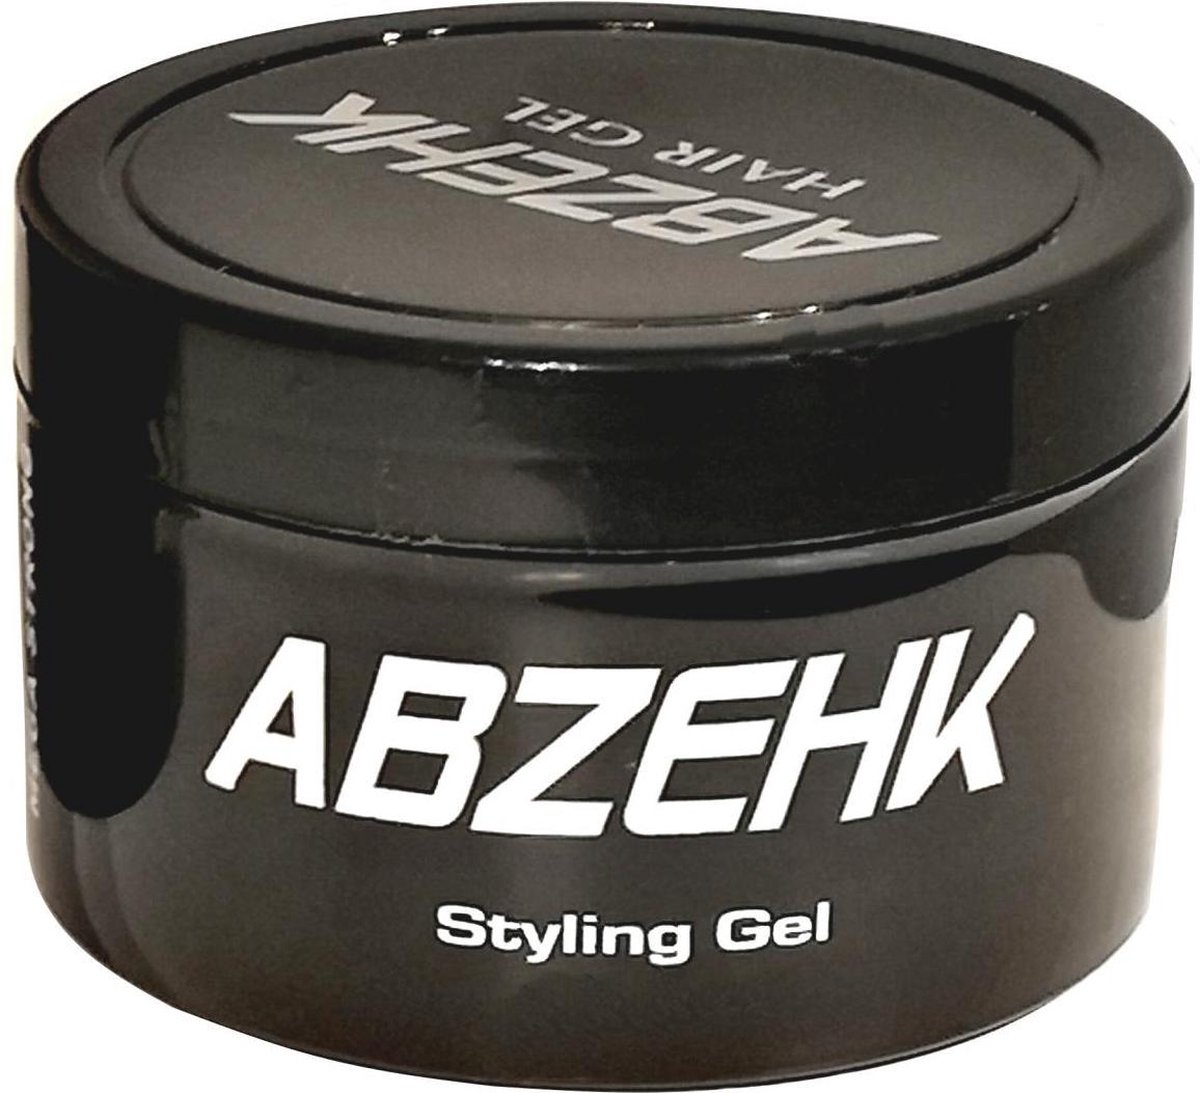 Abzehk Styling Gel Black Mega Strong 450ml